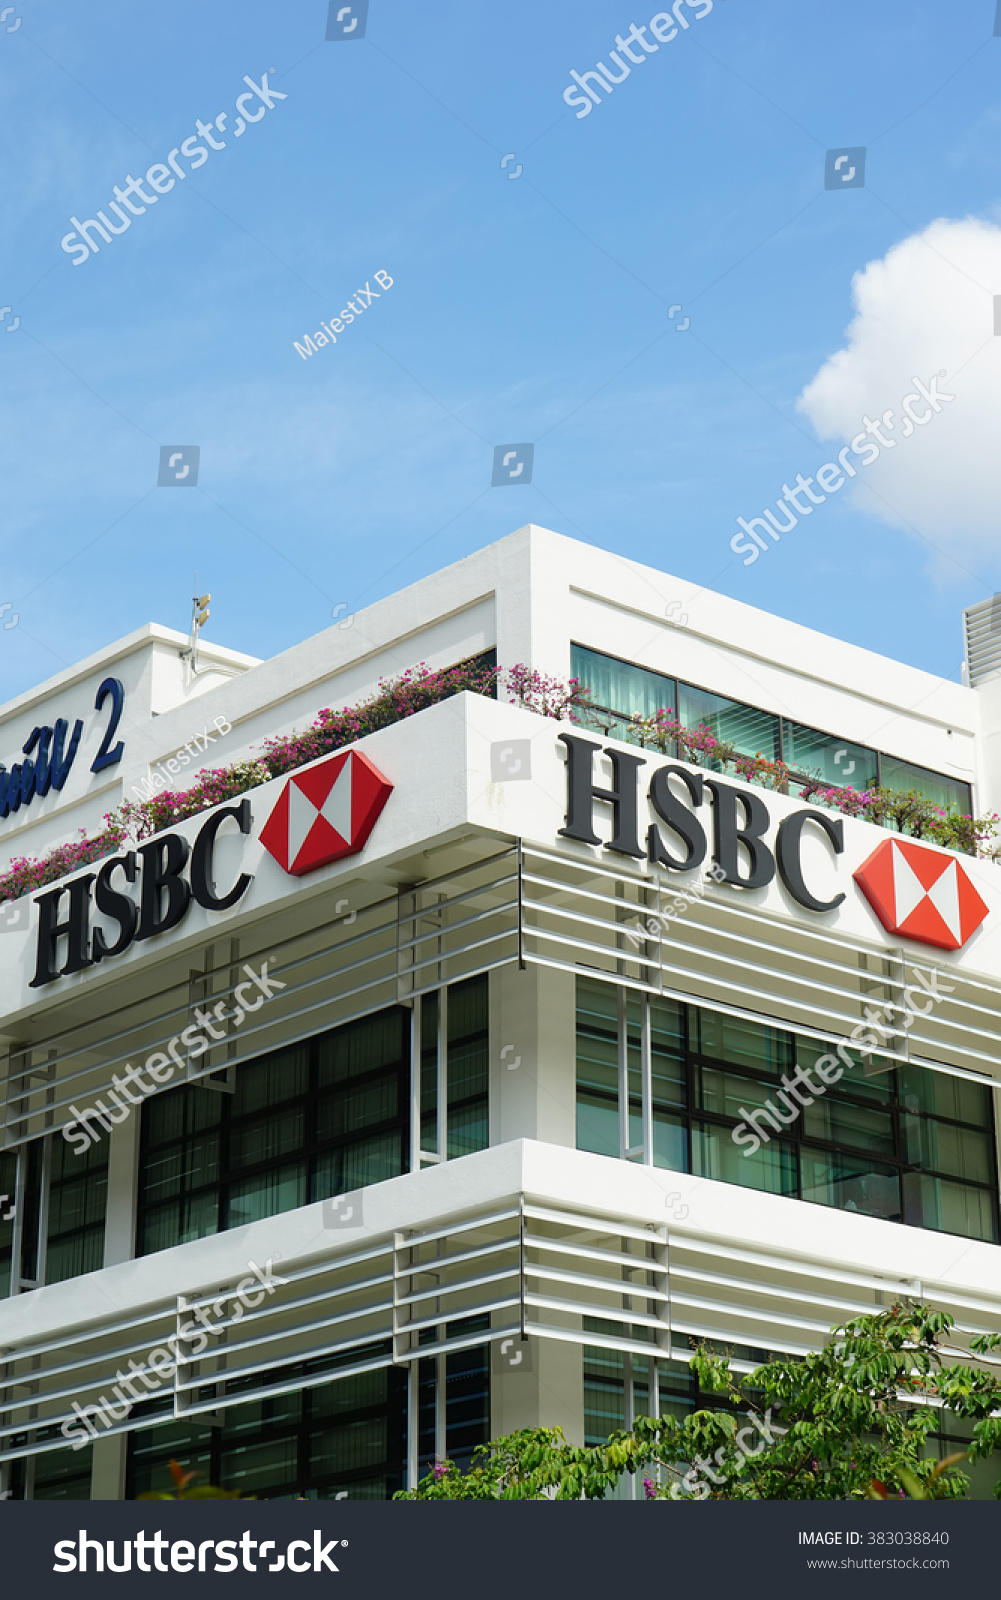 Malaysia hsbc online banking Online Banking